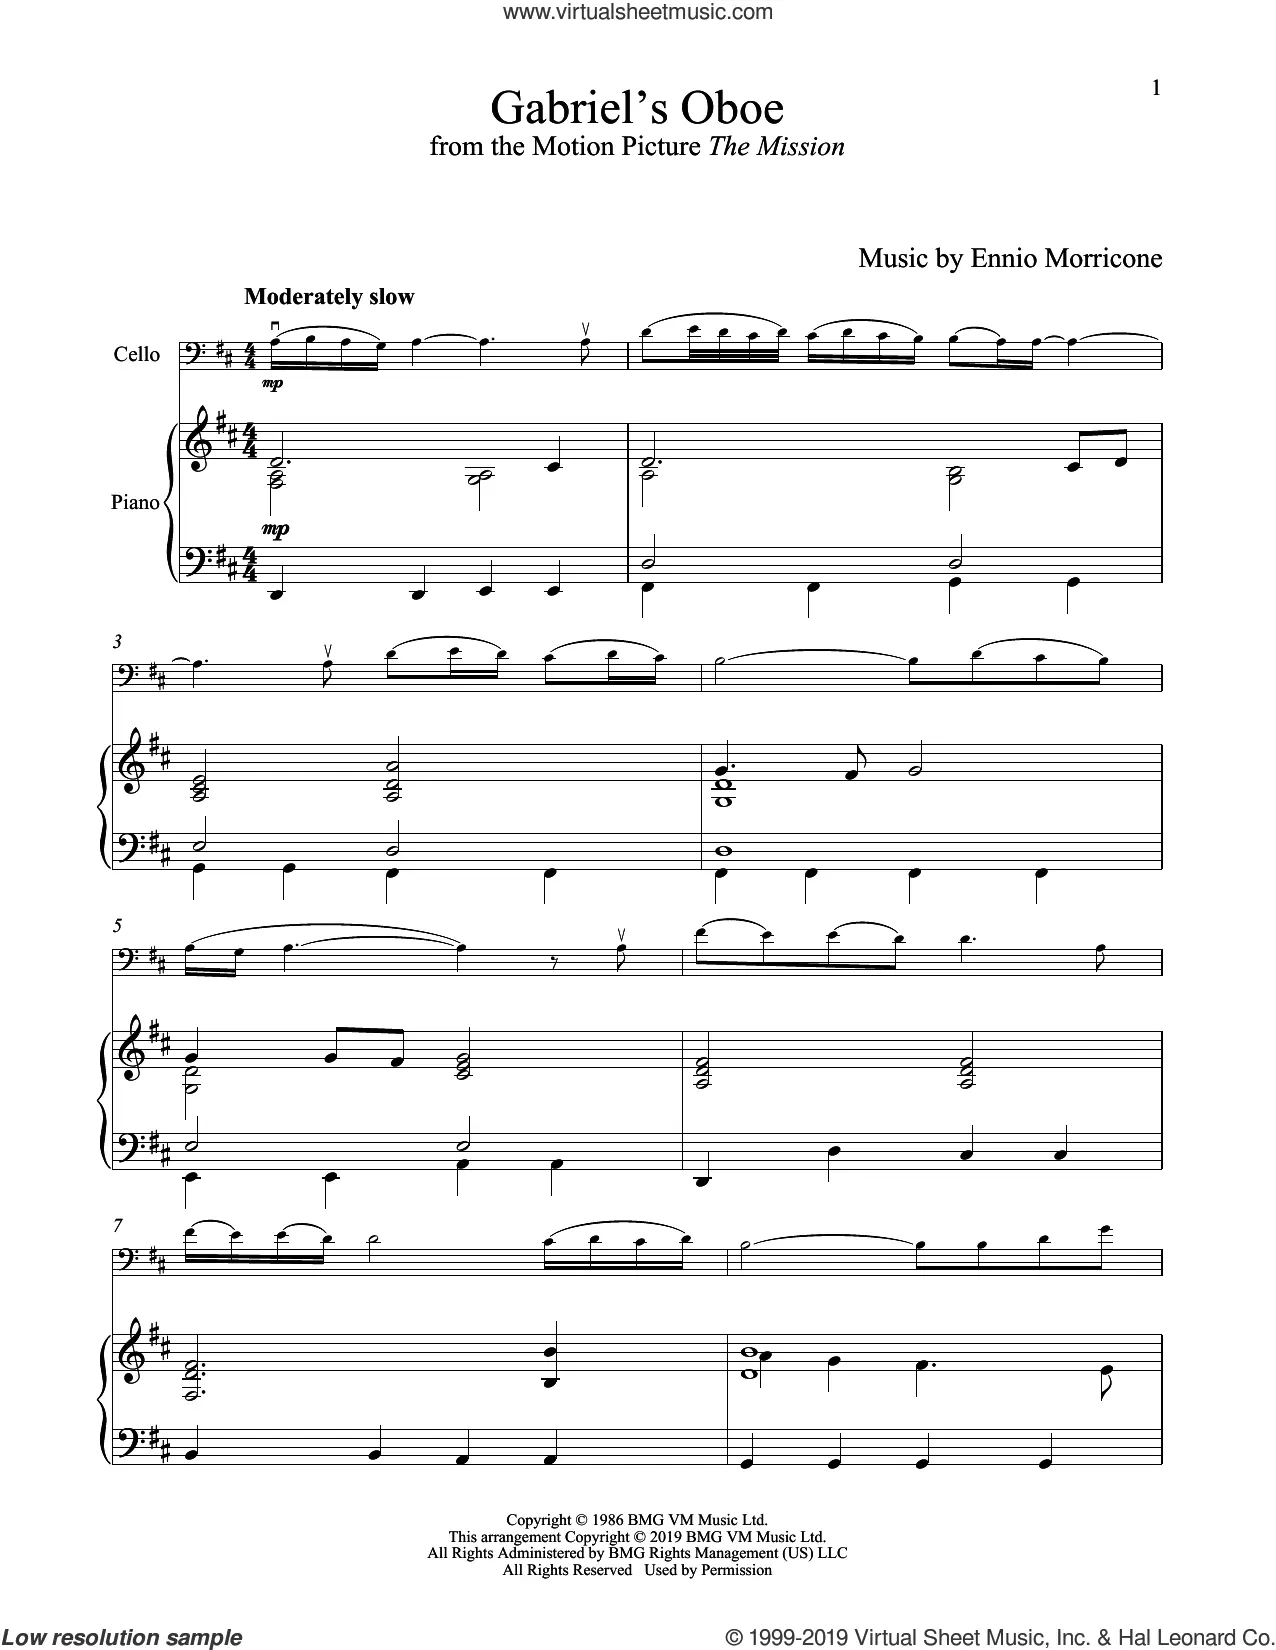 Download Digital Sheet Music of Ennio Morricone for Cello,